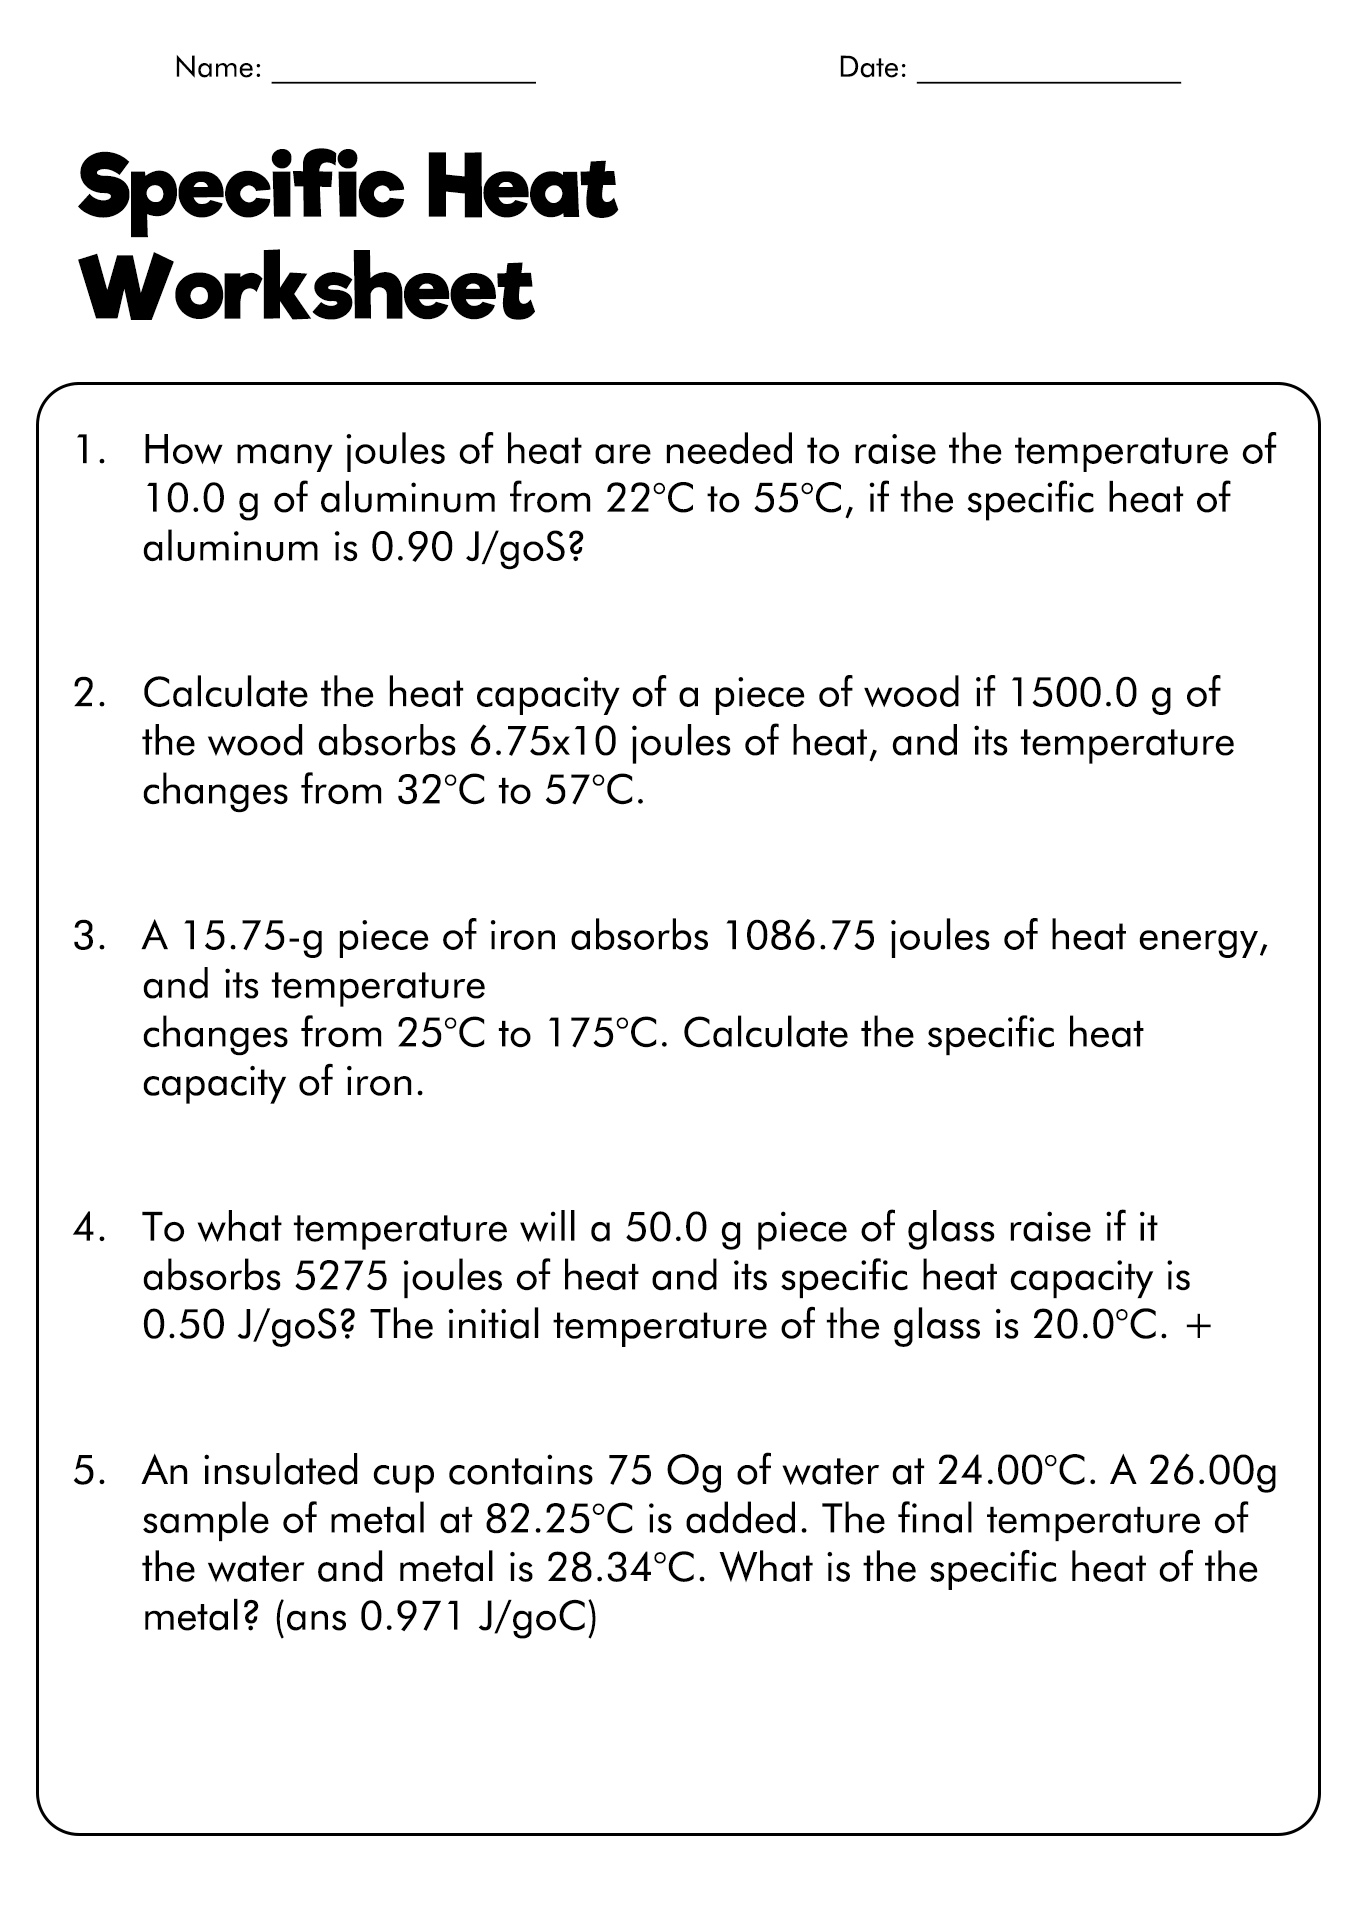 Specific Heat Capacity Worksheet Image